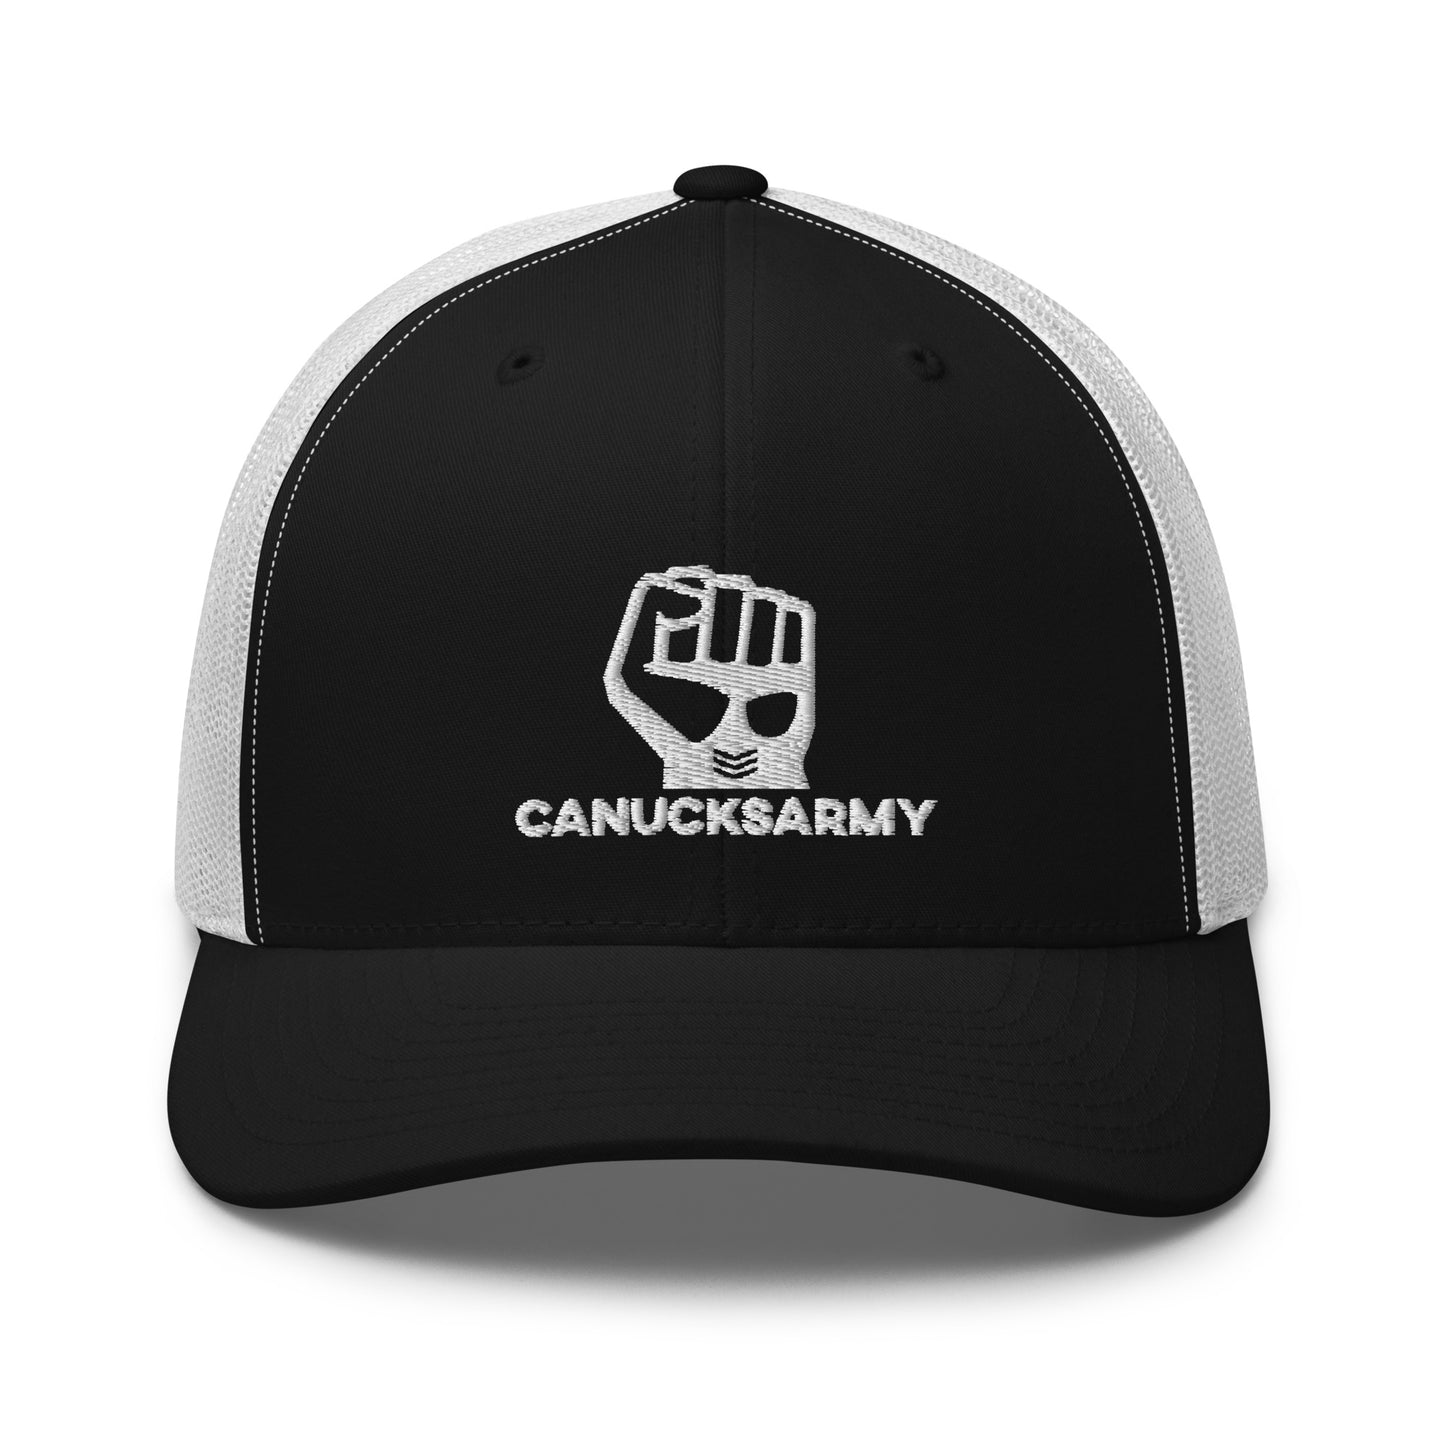 THE CLASSICS - Canucksarmy Trucker Hat